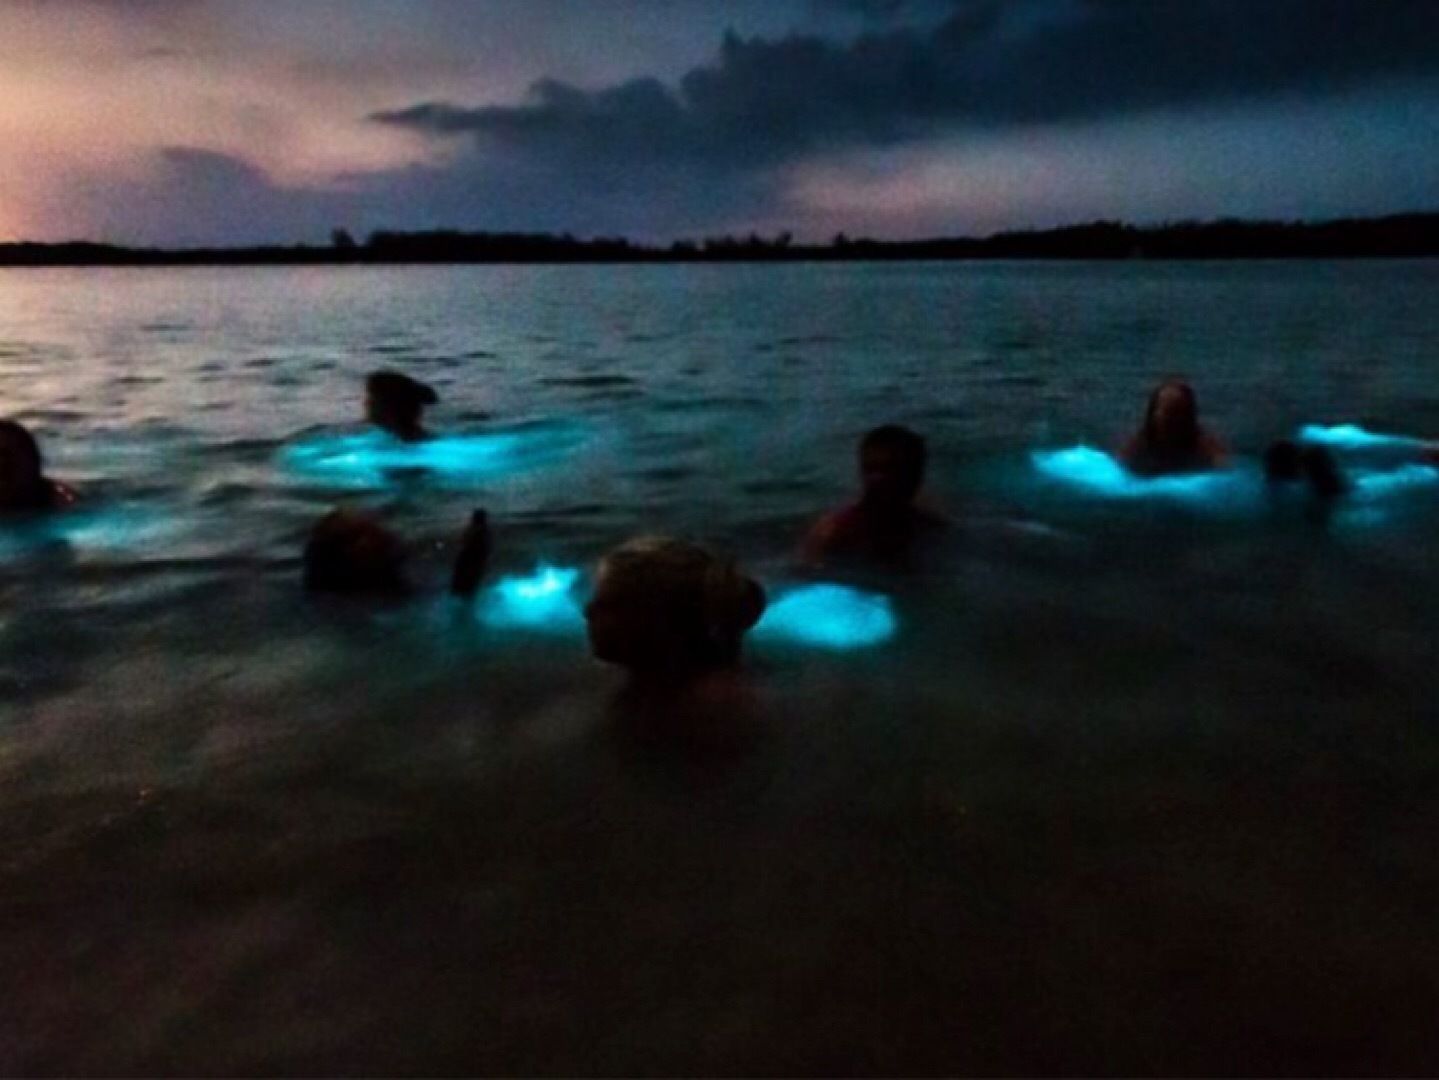 luminous lagoon jamaica